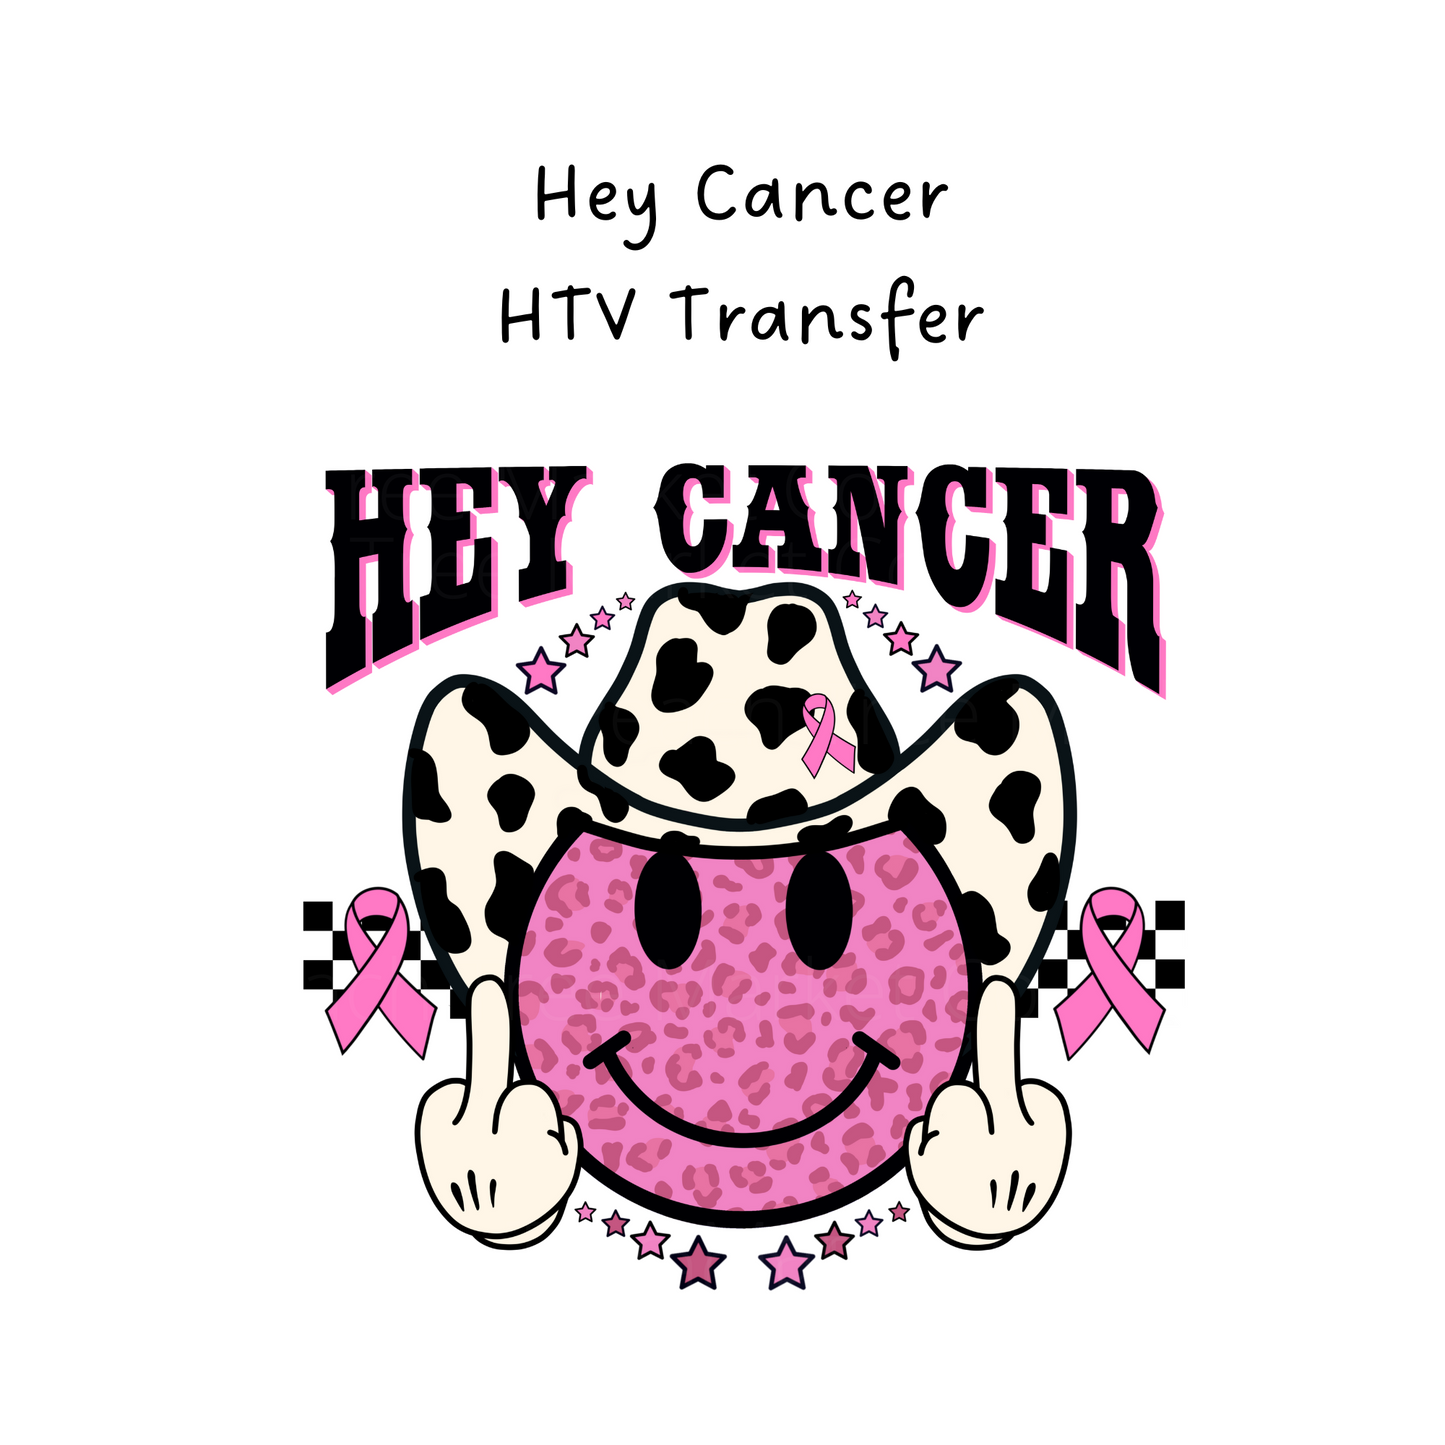 Hey Cancer HTV Transfer